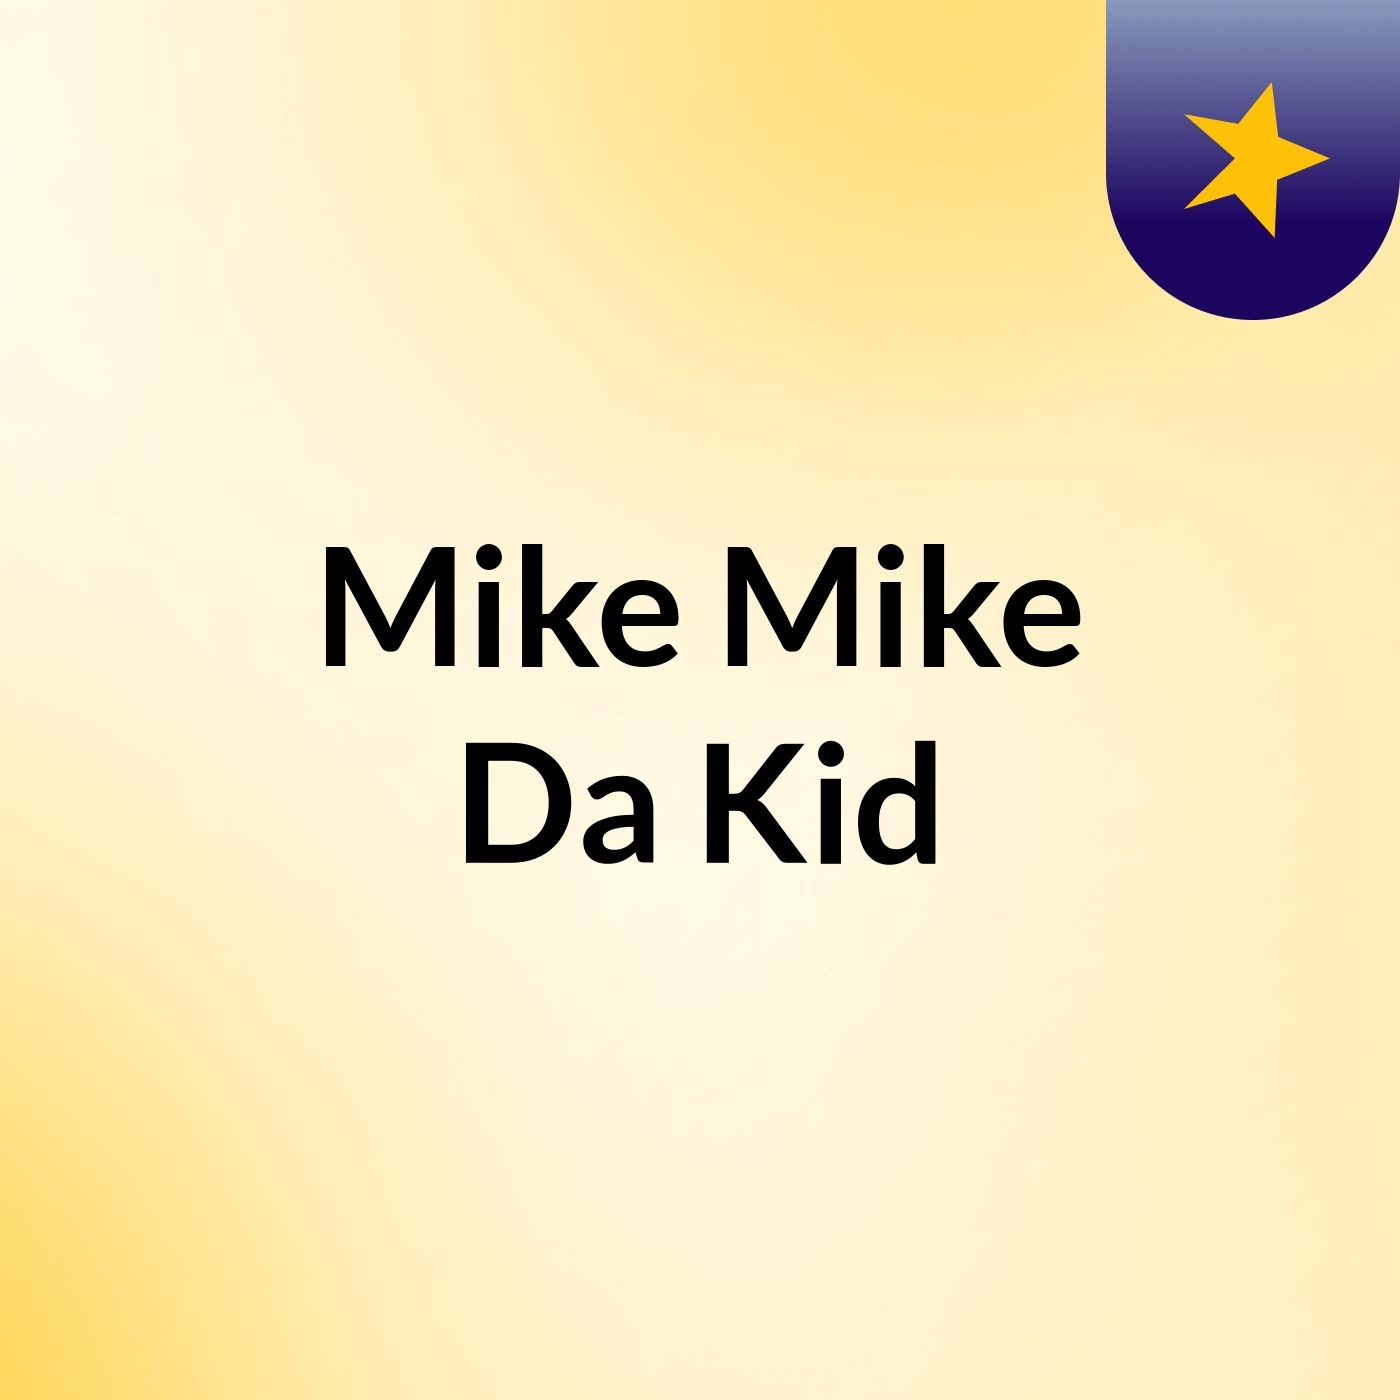 Mike Mike Da Kid: Geeked